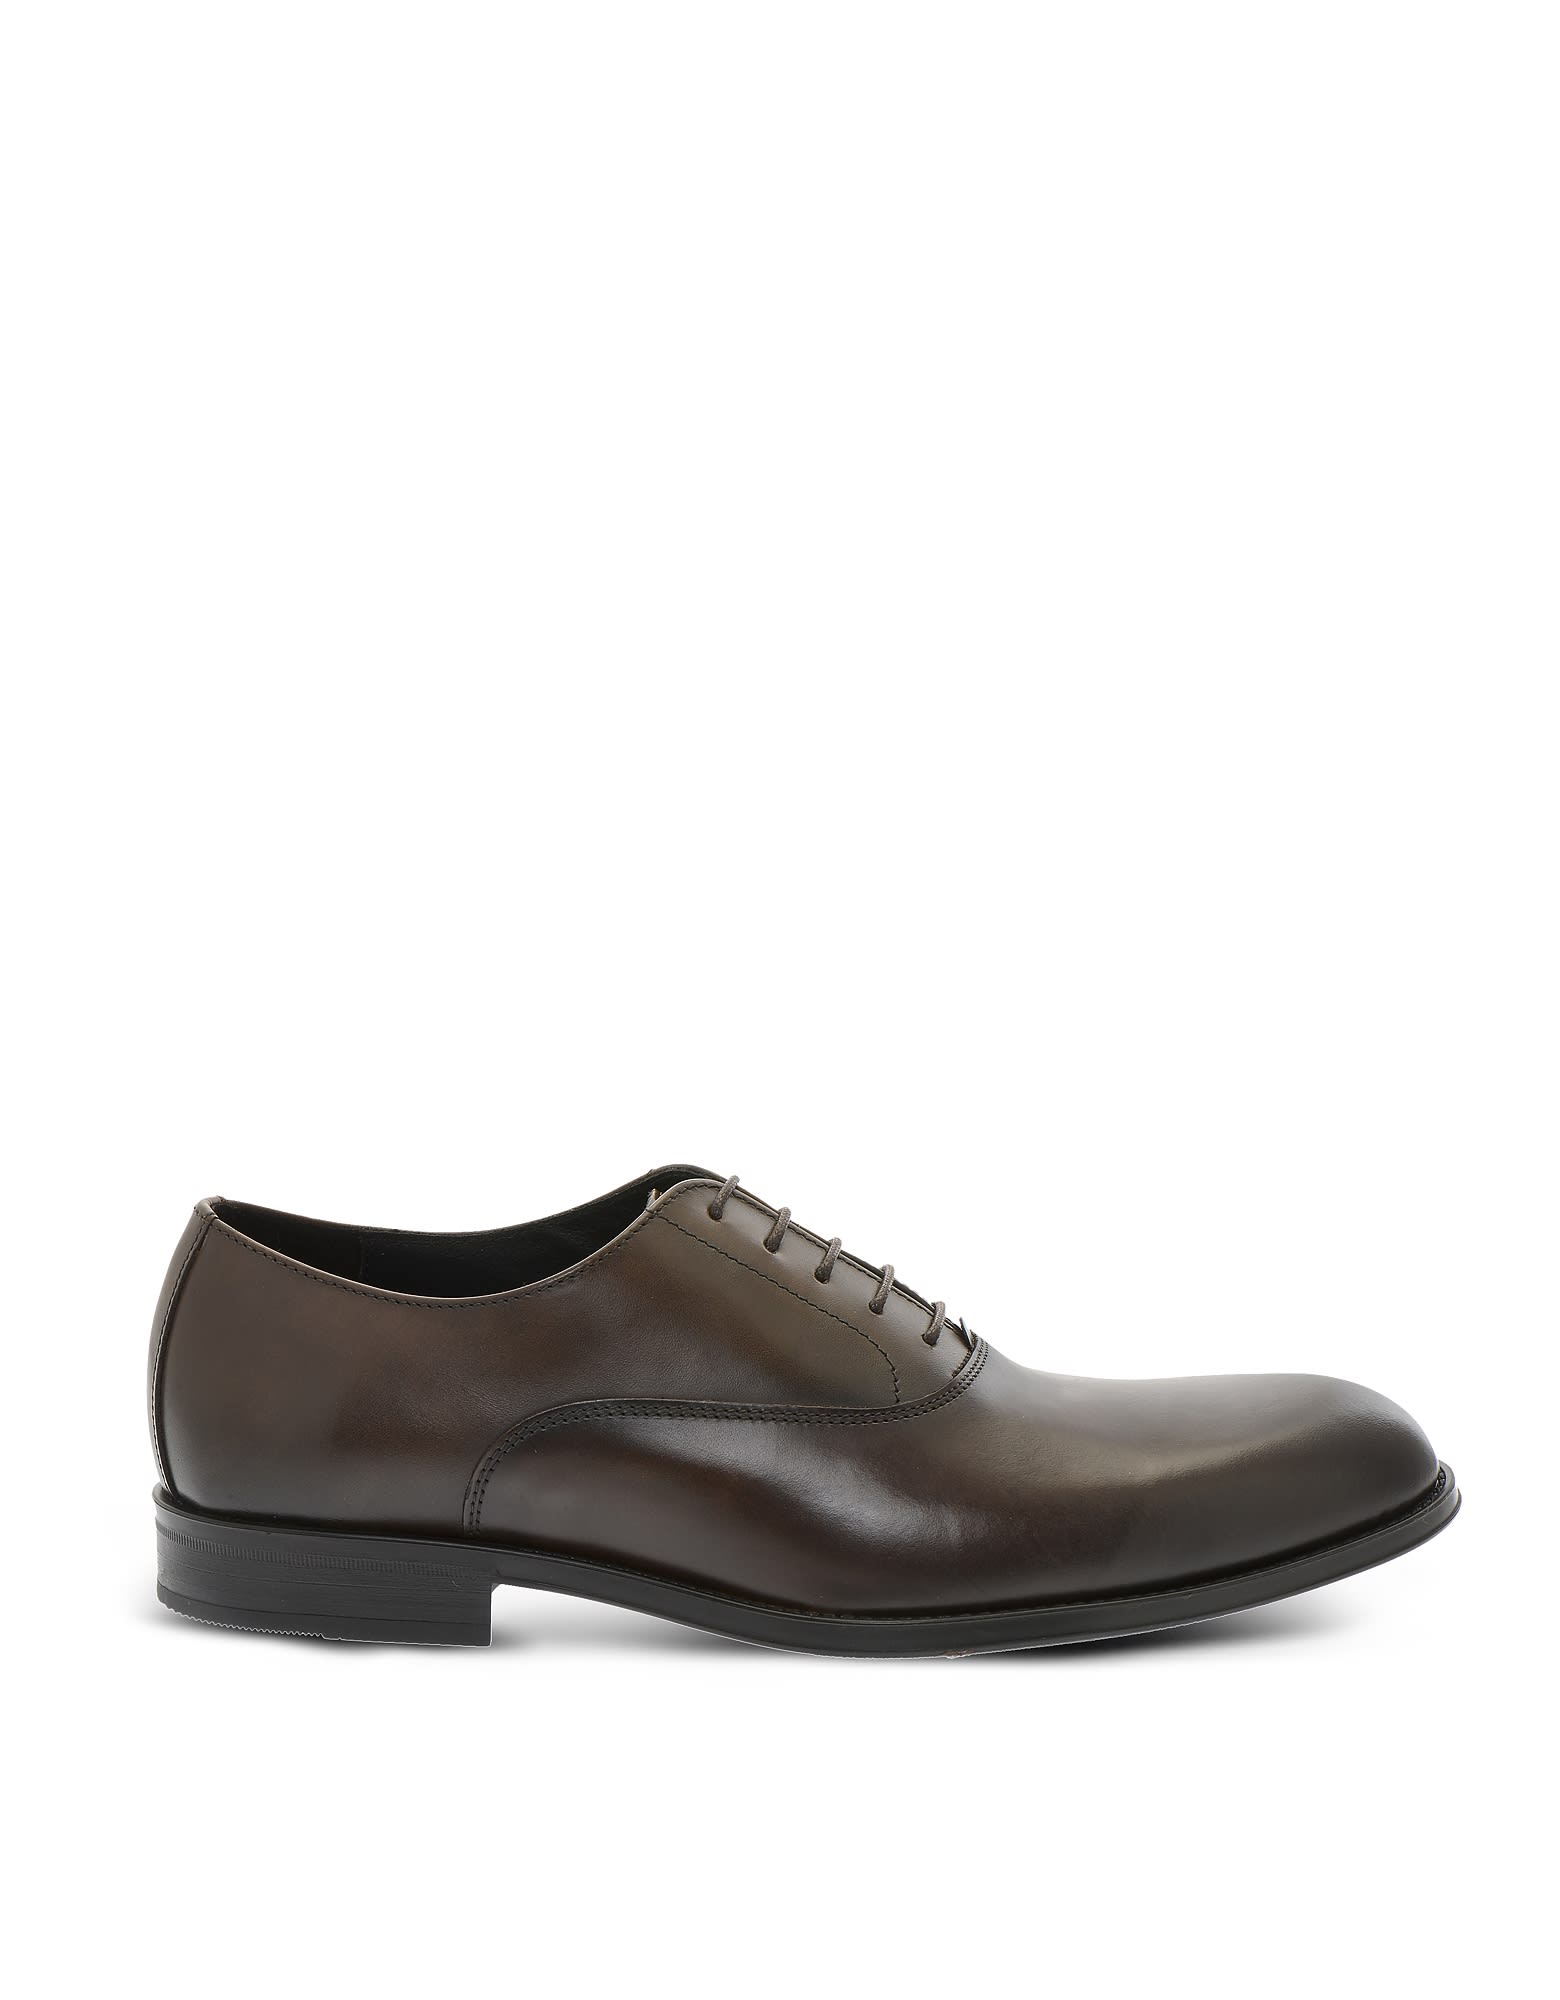 A.testoni Leather Mens Oxford Shoes